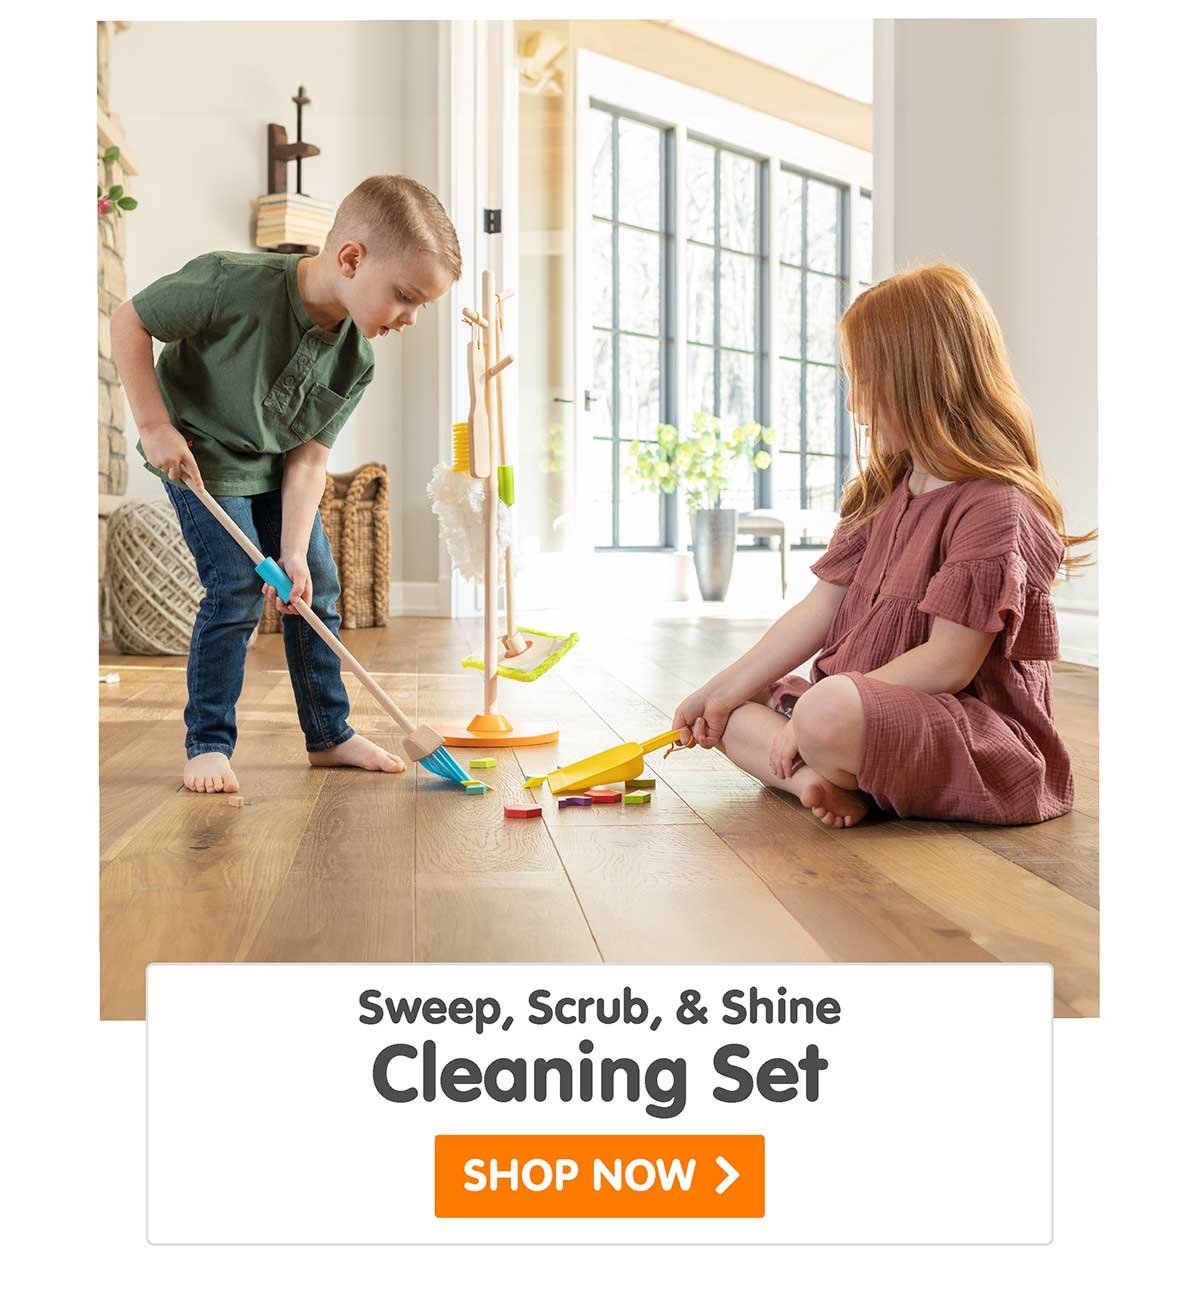 Sweep, Scrub, and Shine Cleaning Set